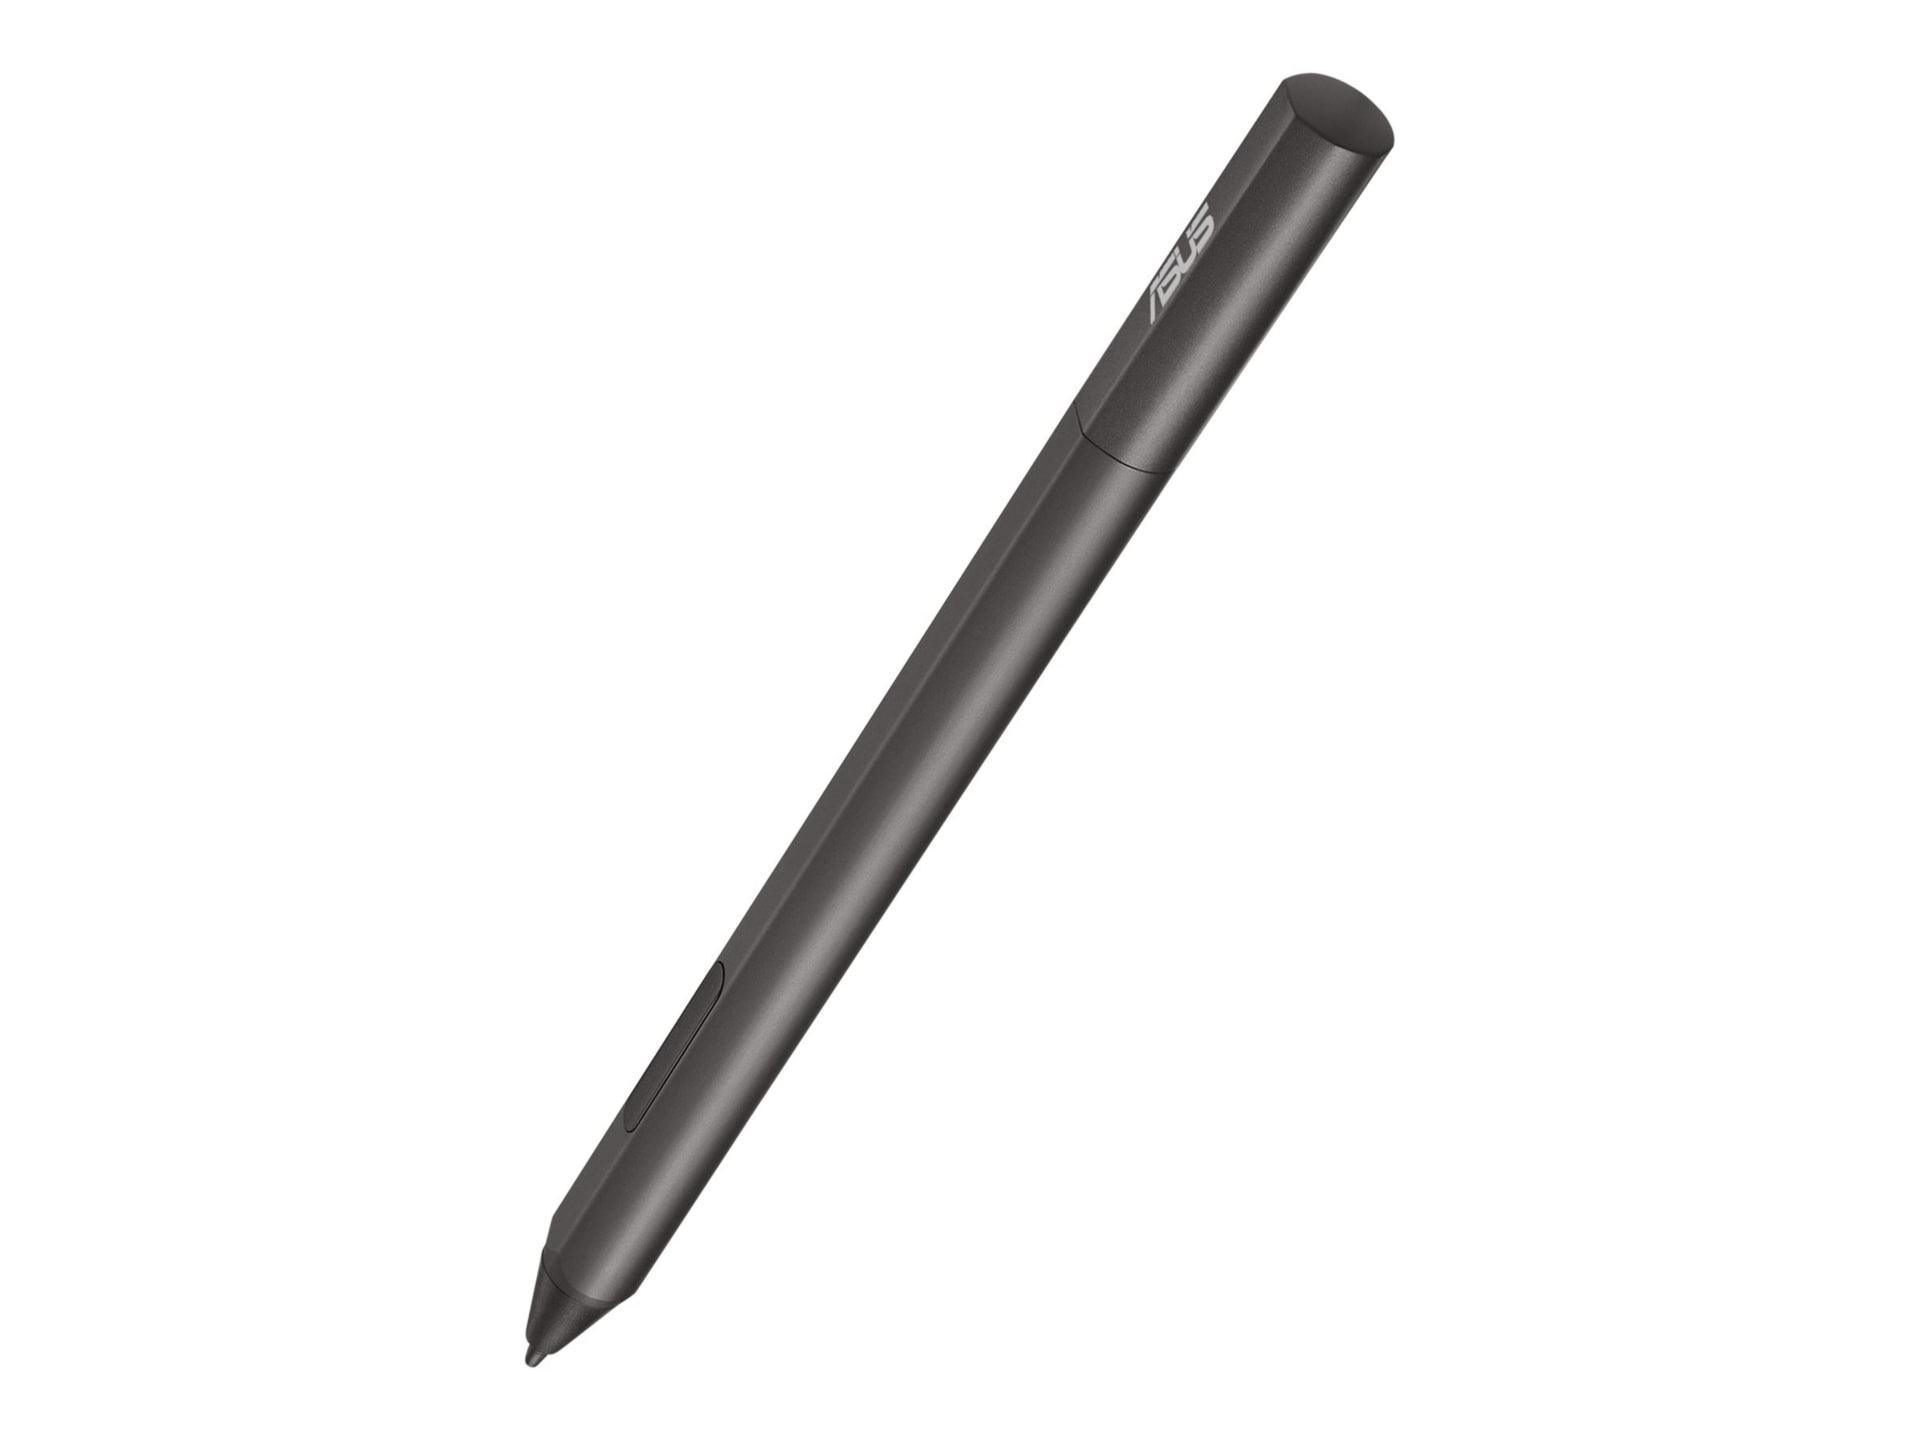 ASUS SA201H Stylus Pen for ZenBook Laptops - Gunmetal